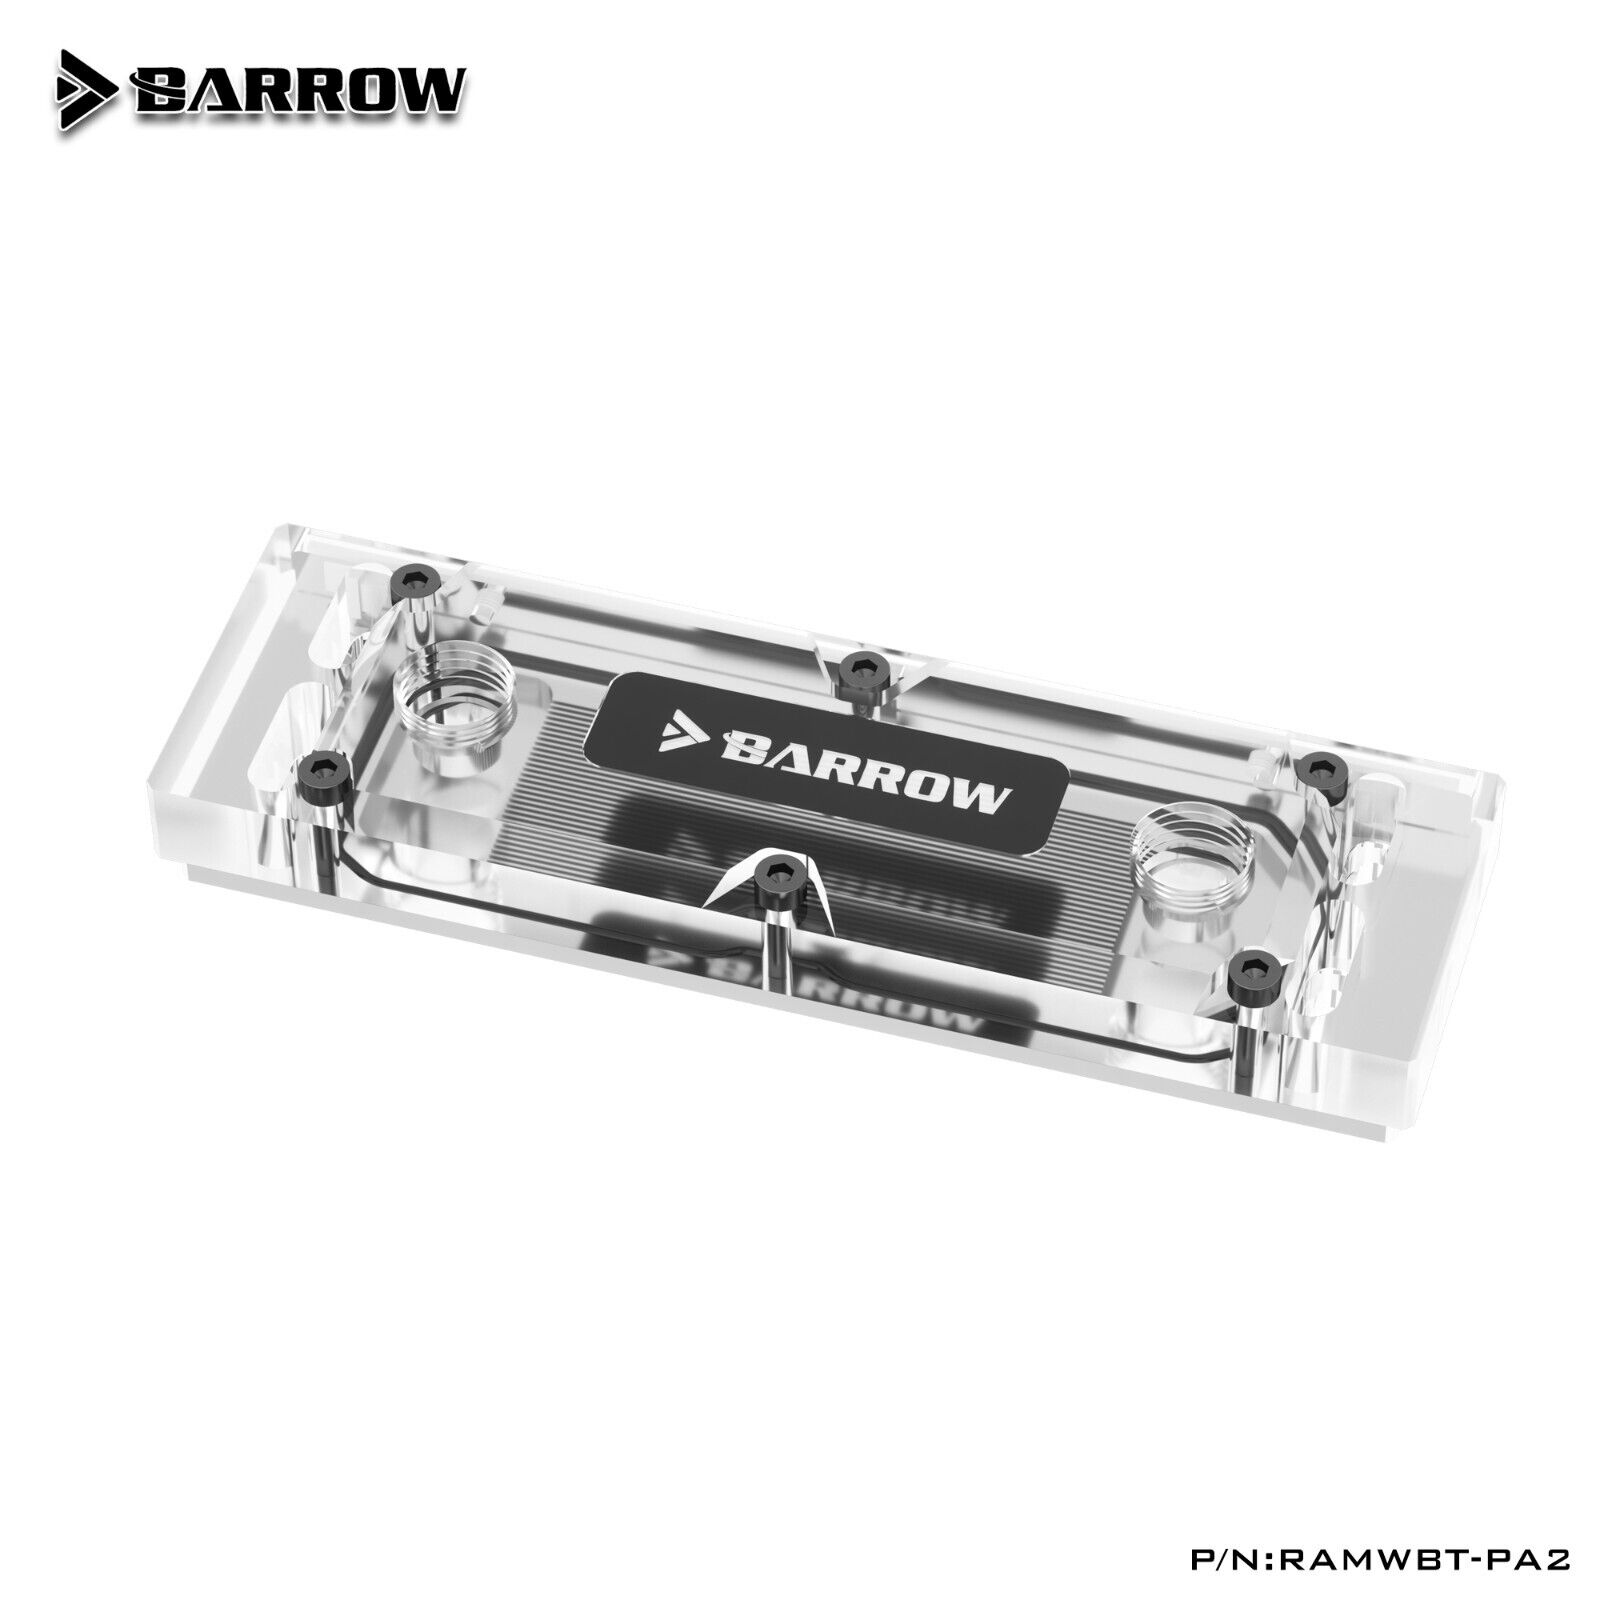 Barrow water cooling DDR5 DRAM Memory RGB Water Block DIMM Modules